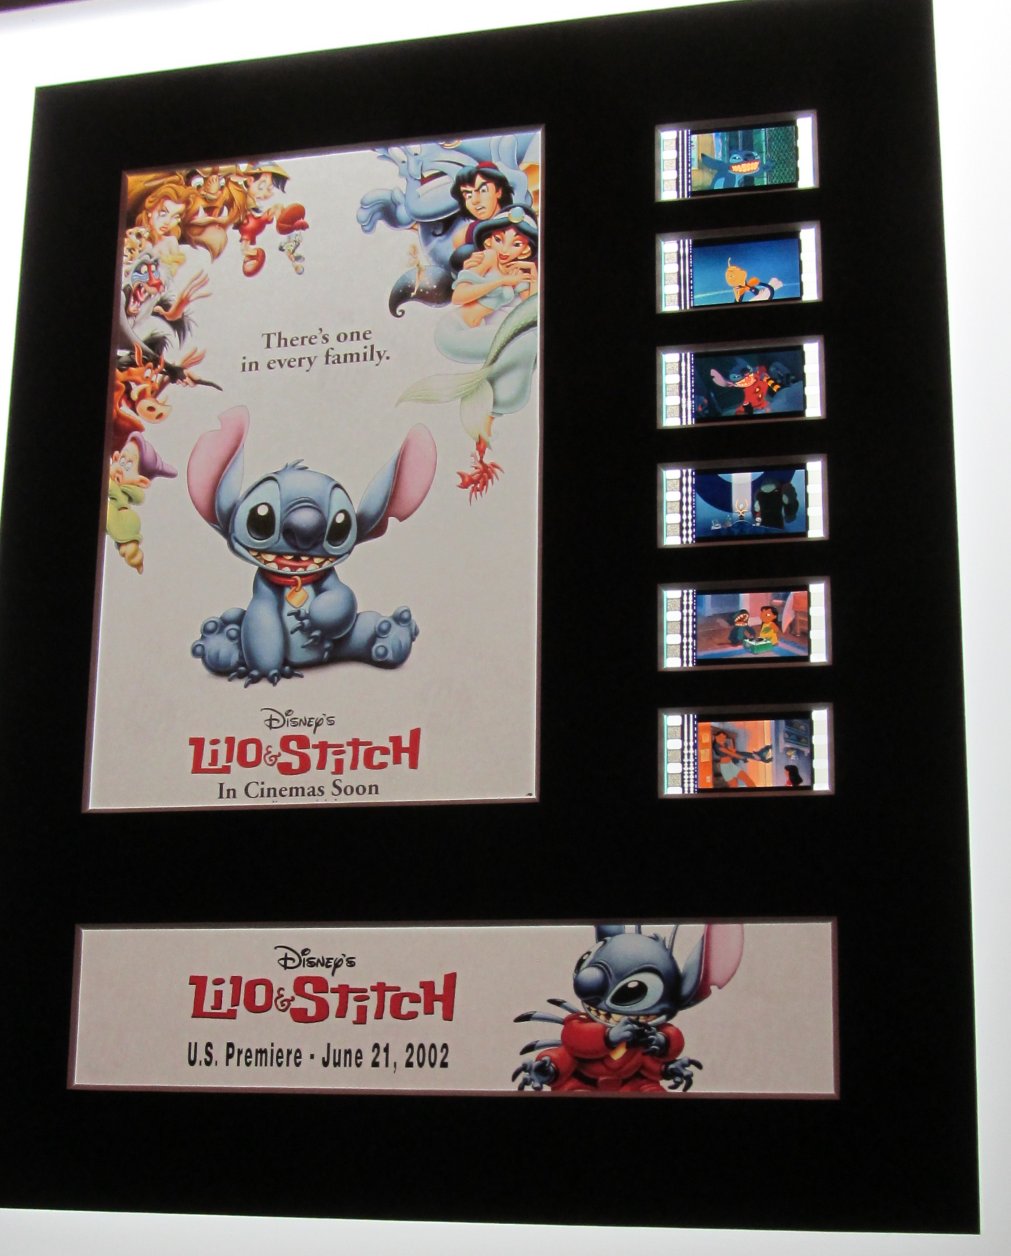 Stitch Disney Poster, Lilo Stitch Pictures, Disney Movie Poster